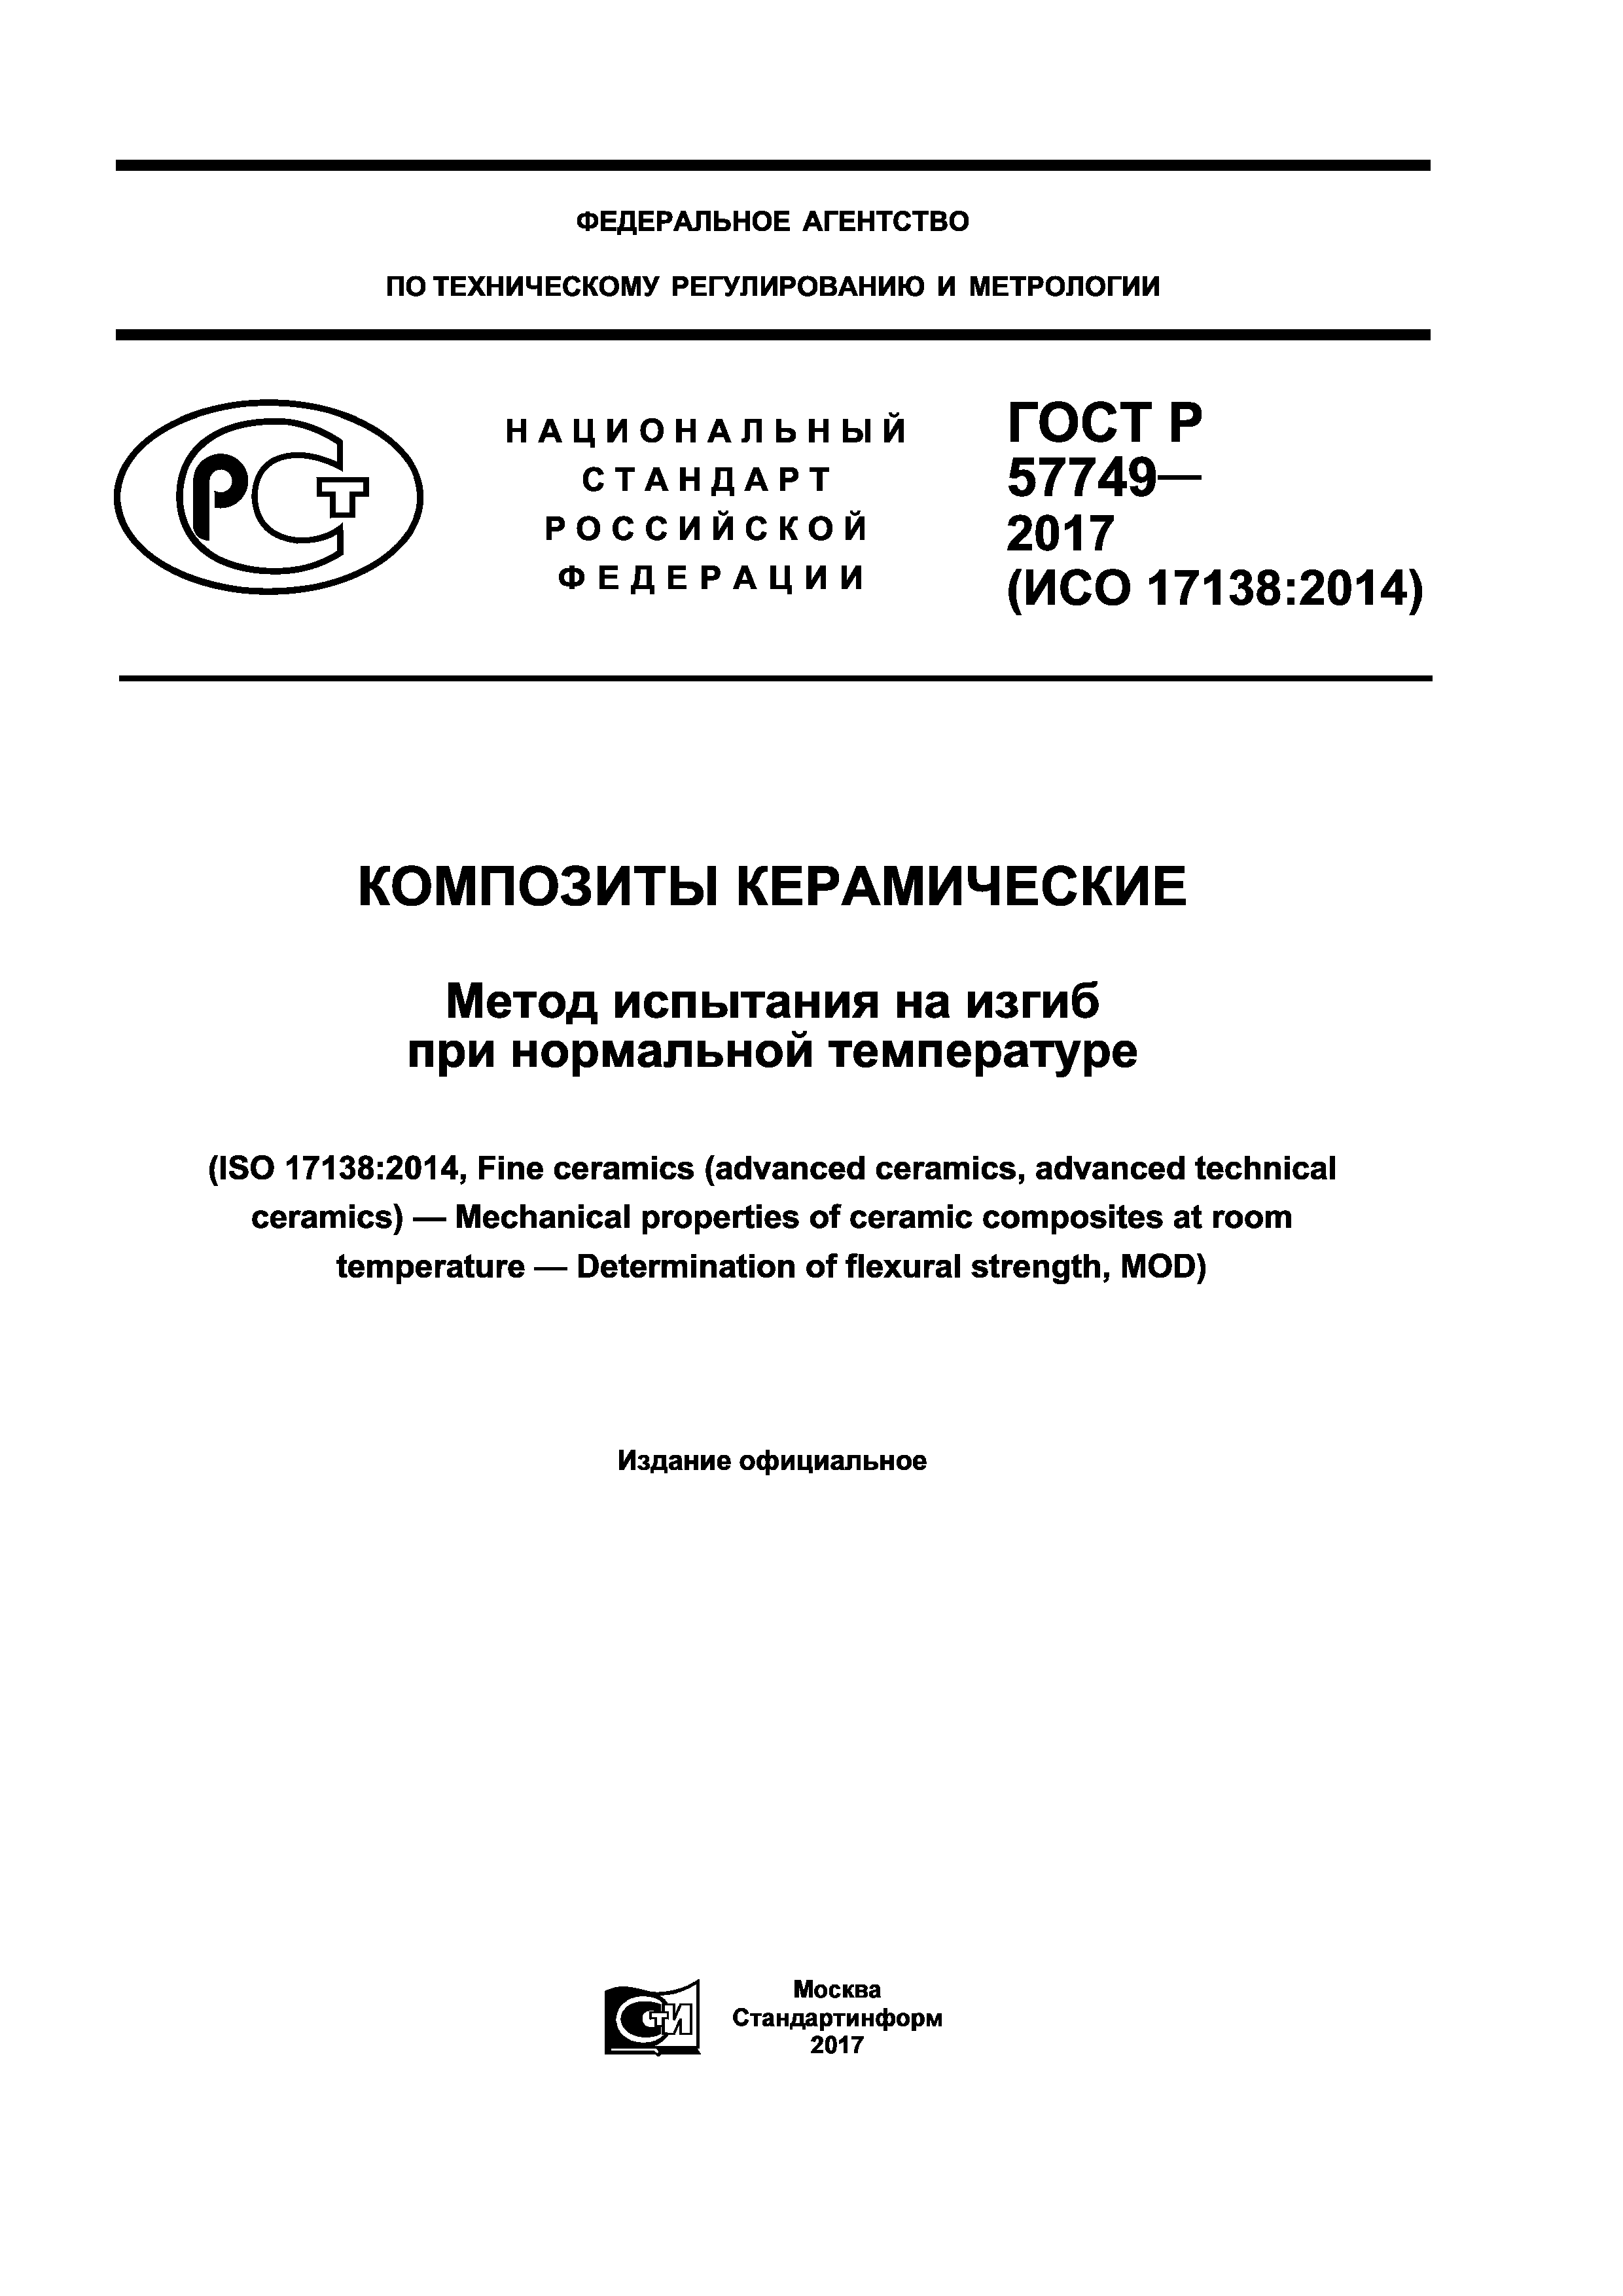 ГОСТ Р 57749-2017